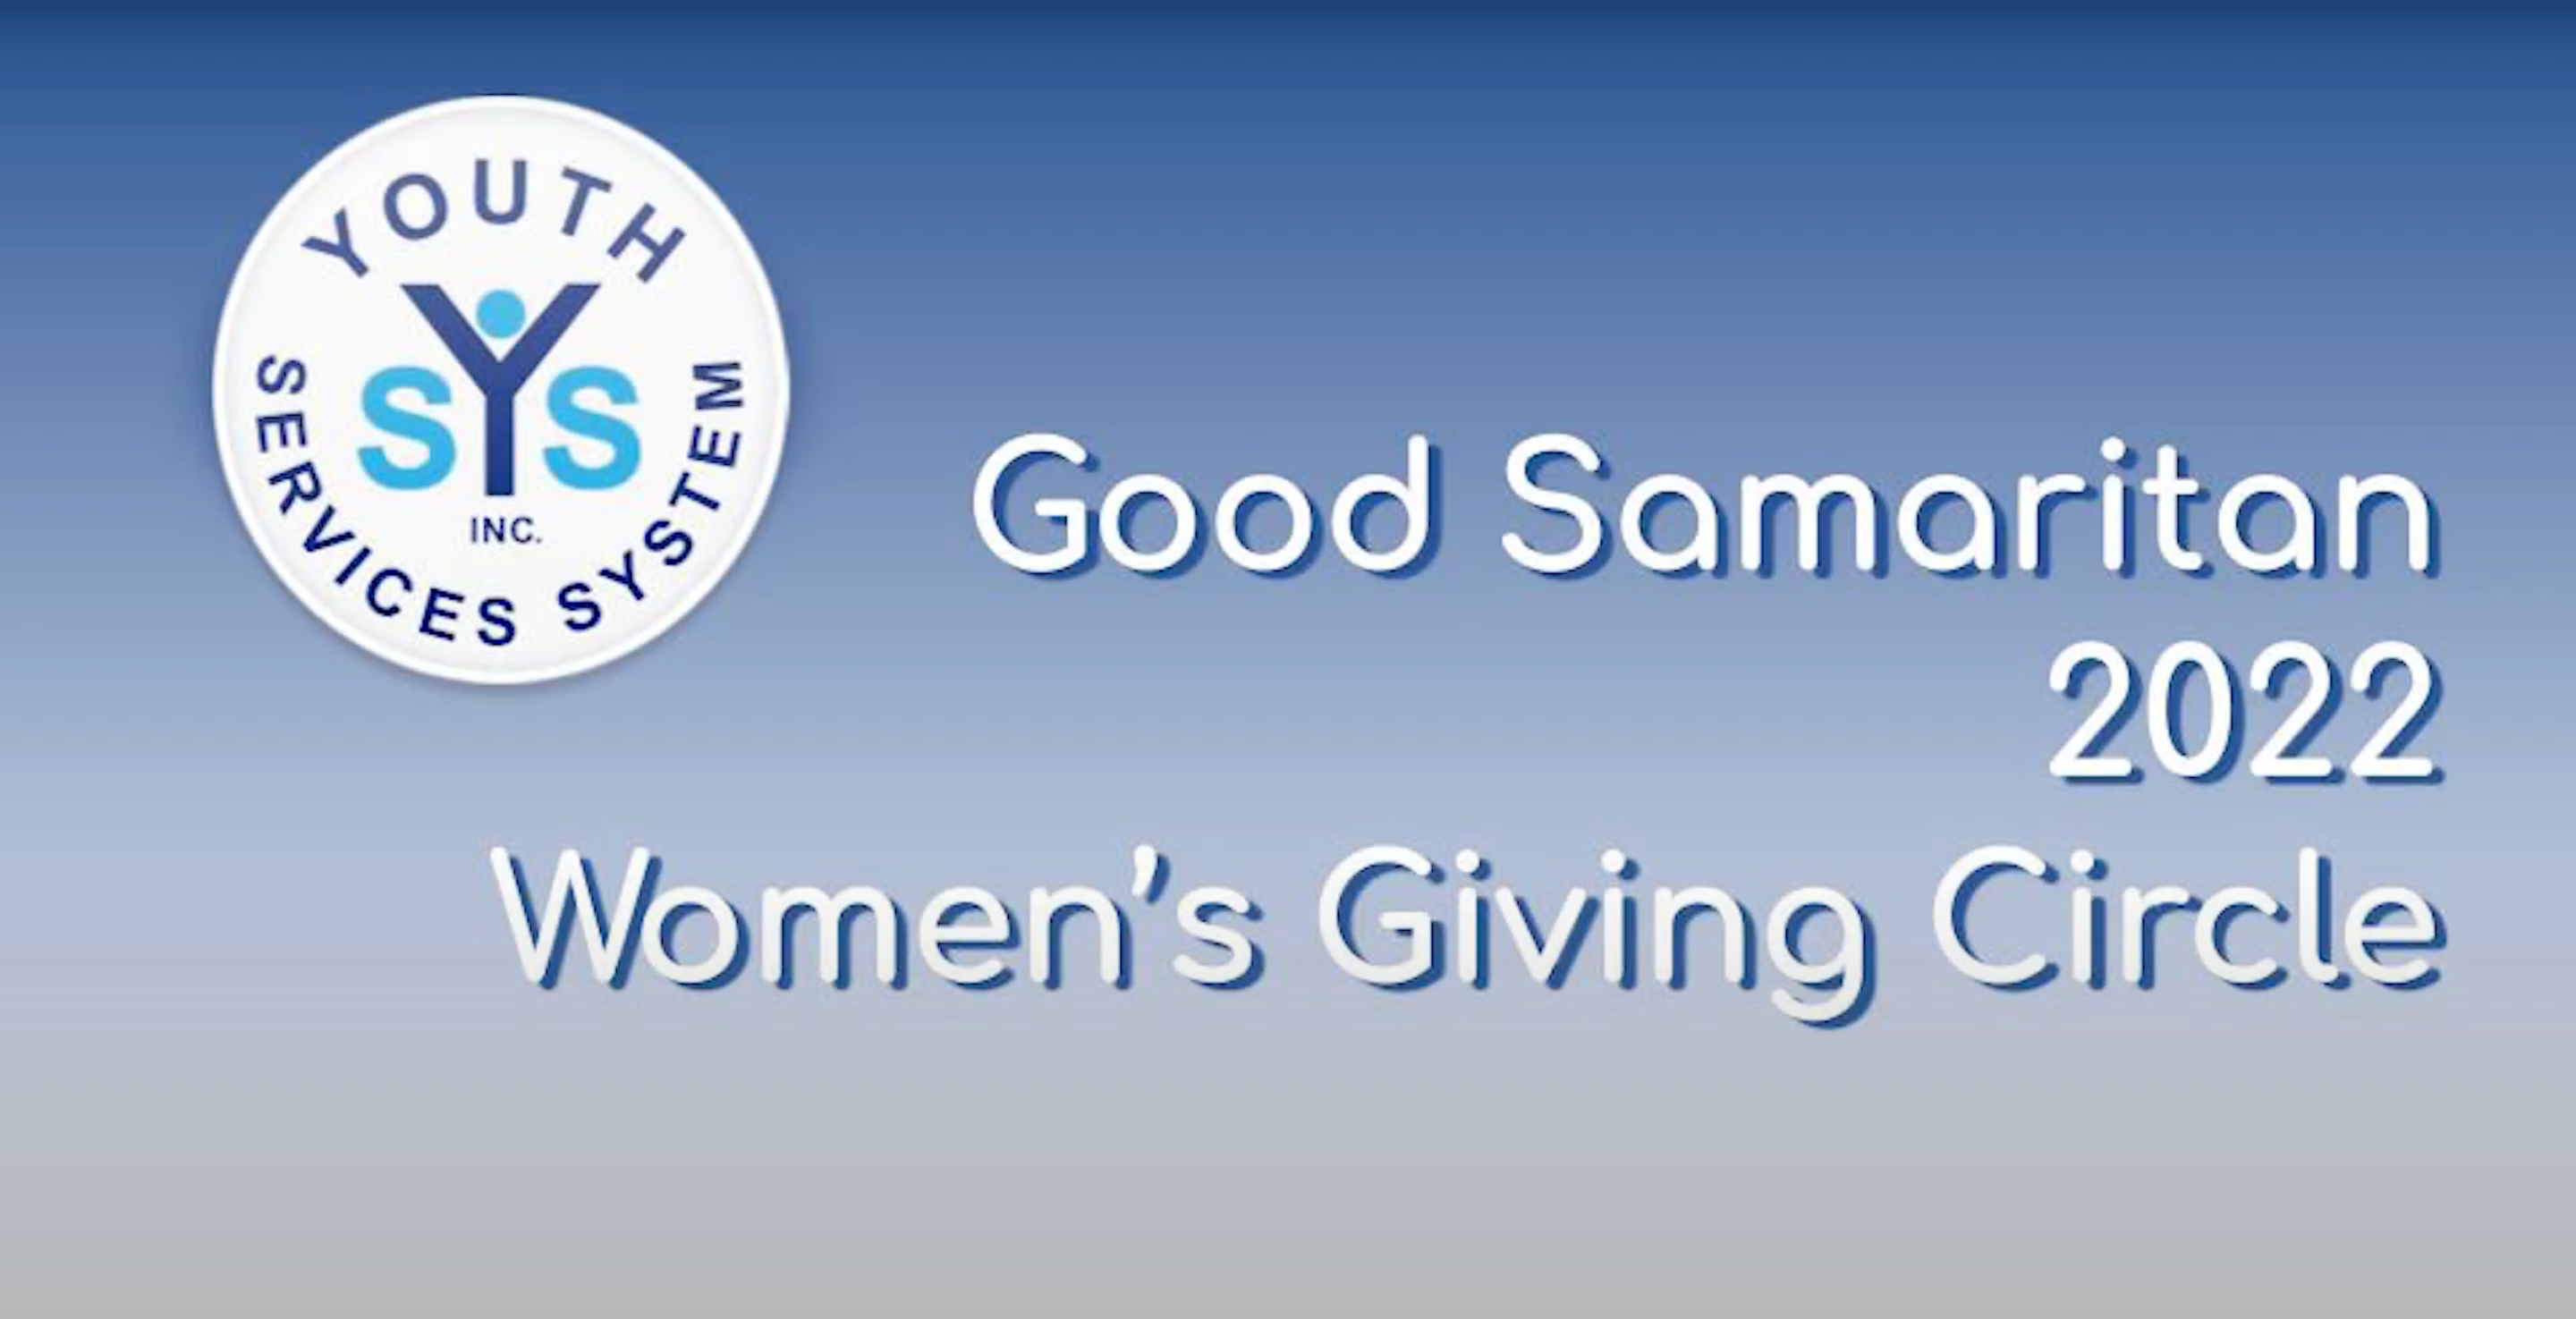 Thumbnail for 2022 Good Samaritan Tribute Video - The Women's Giving Circle